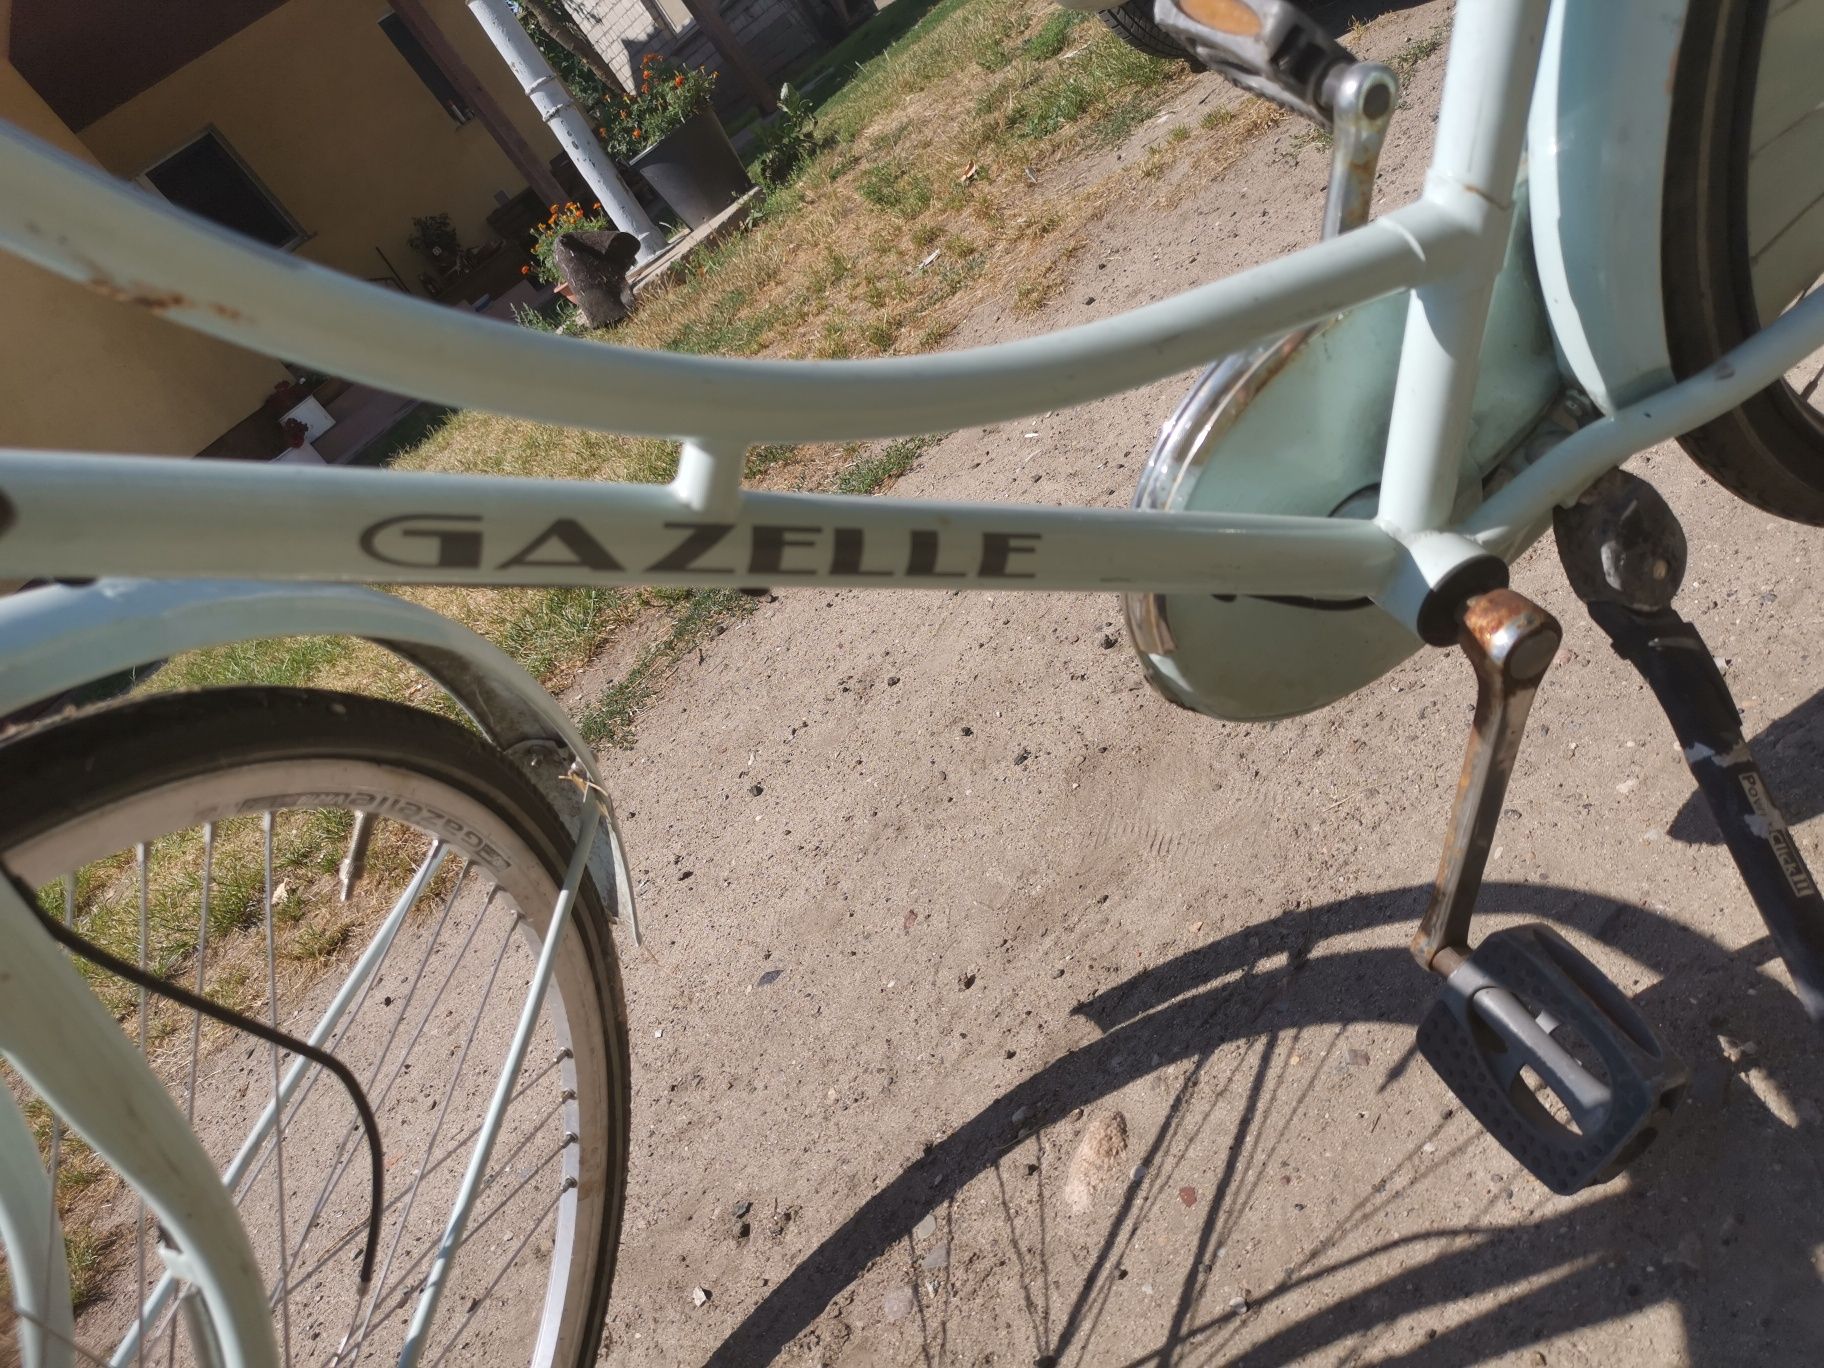 Gazelle holenderski rower